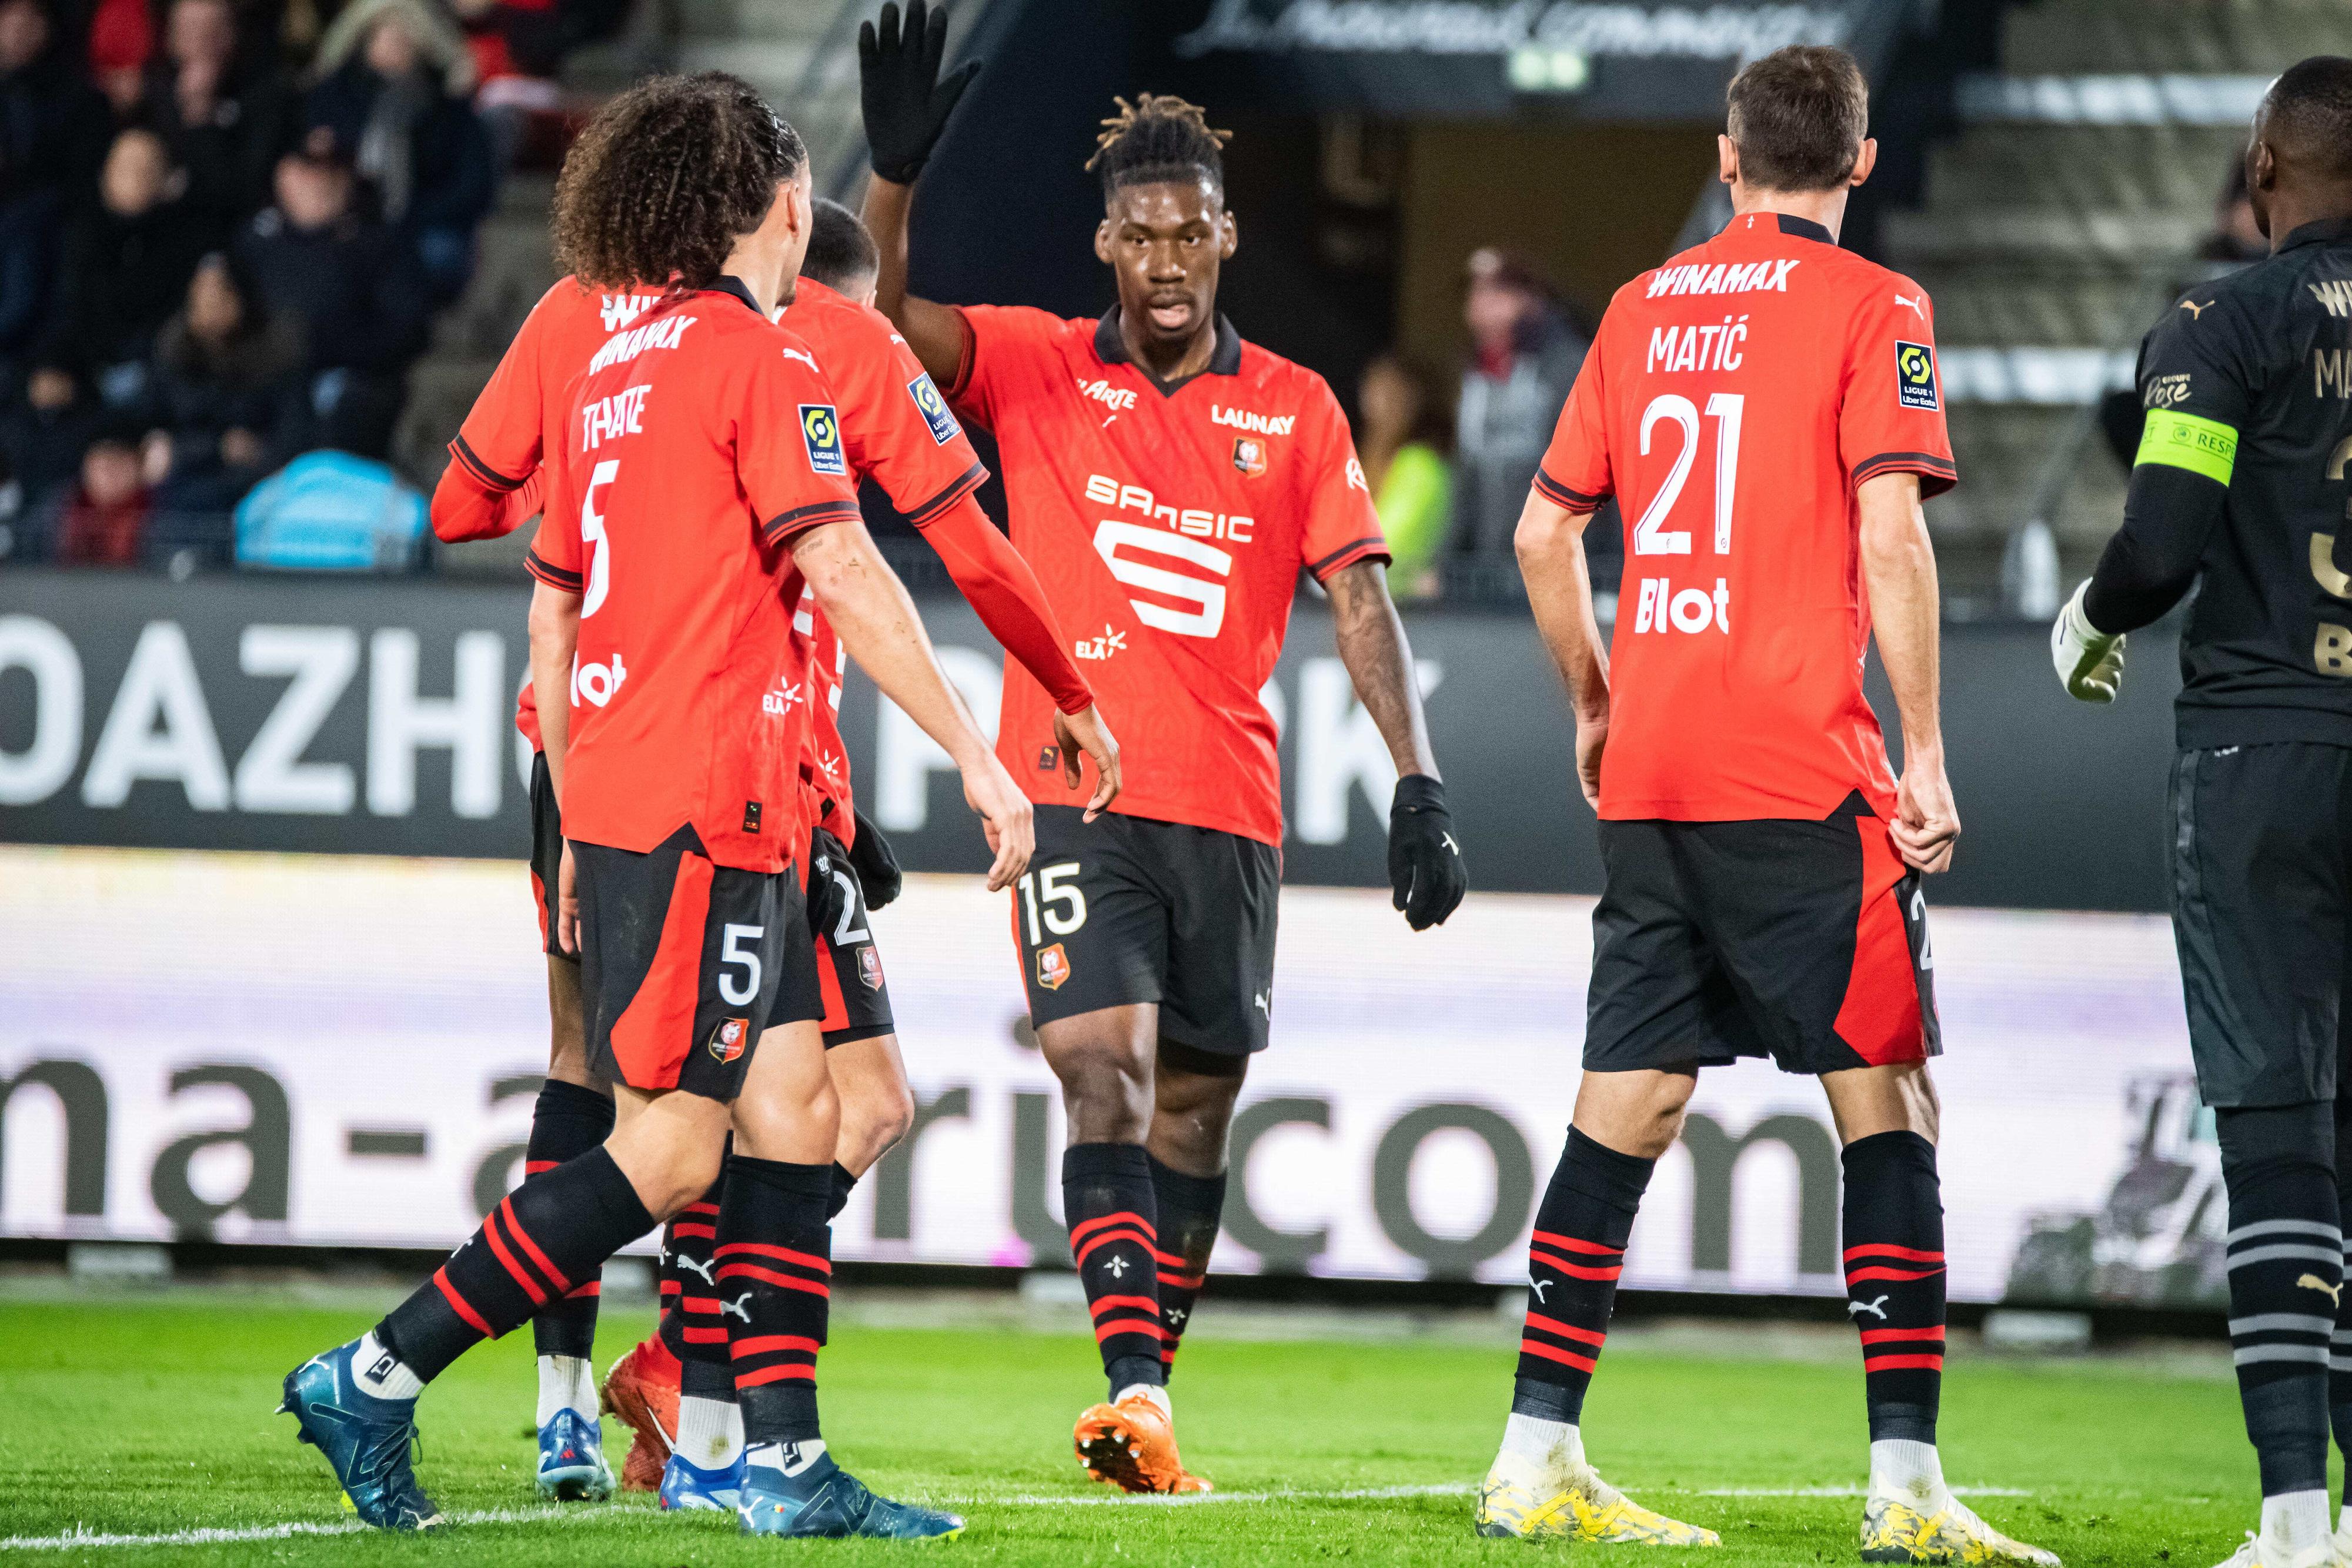 HL Ligue 1 - Rennes 3 - 1 Reims